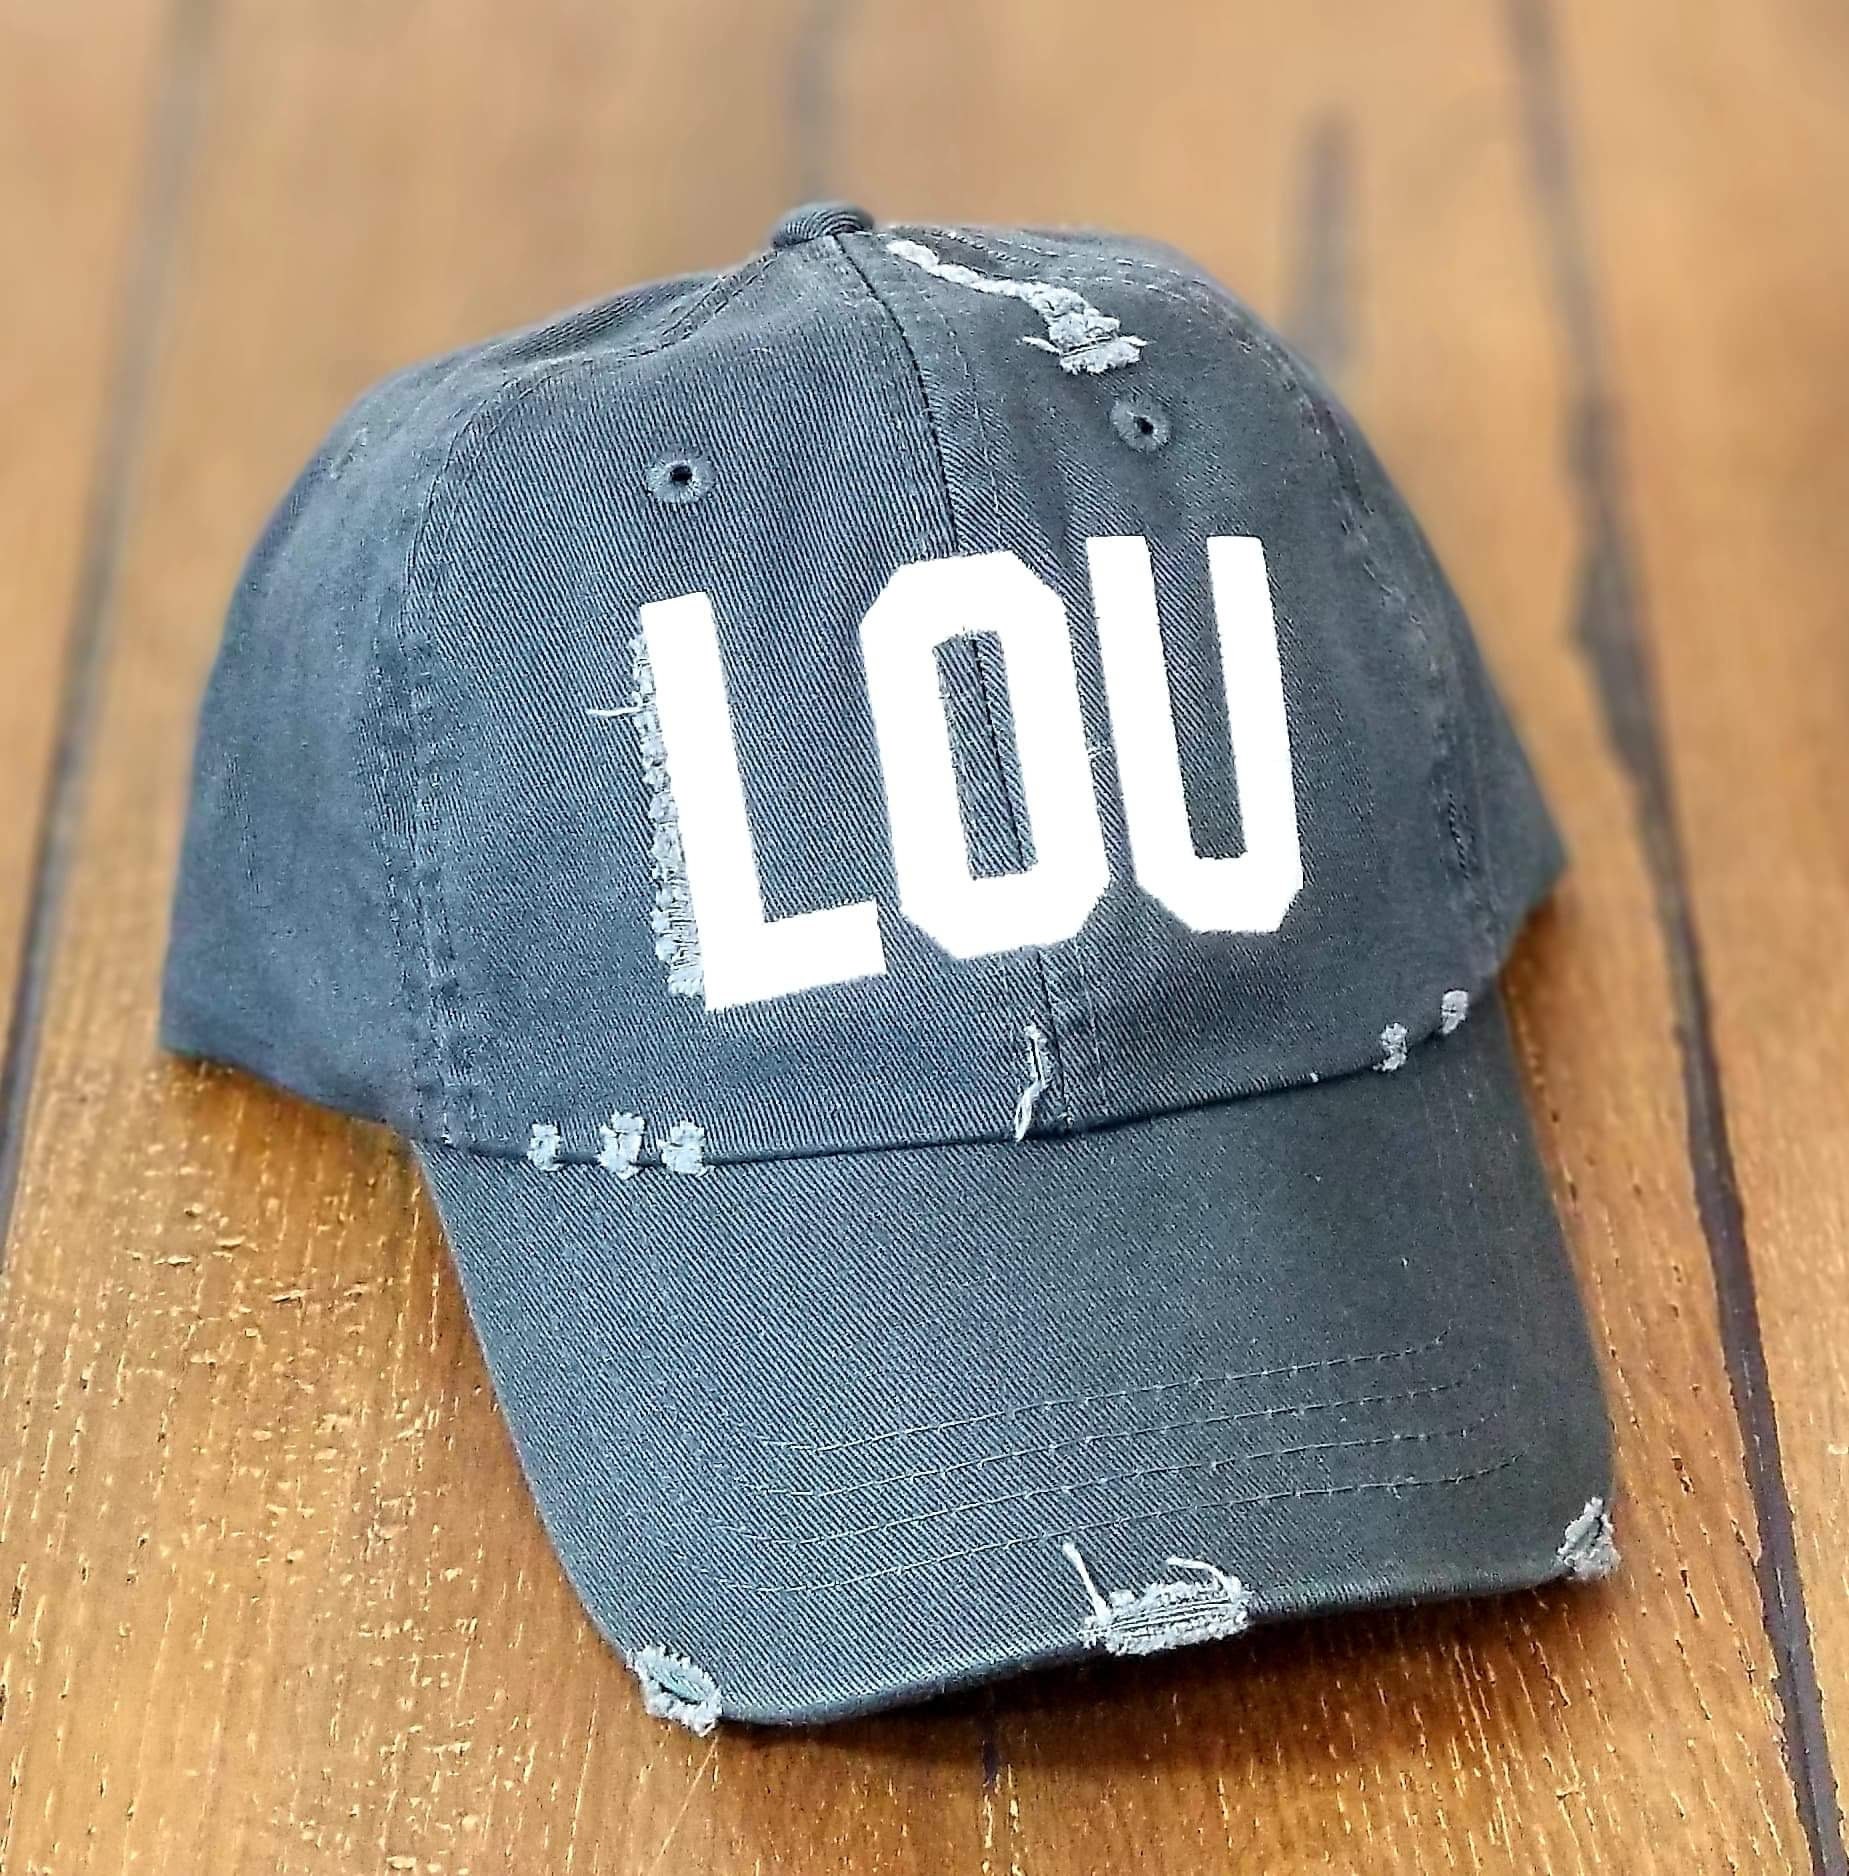 Lou - Louisville, KY Hat Navy